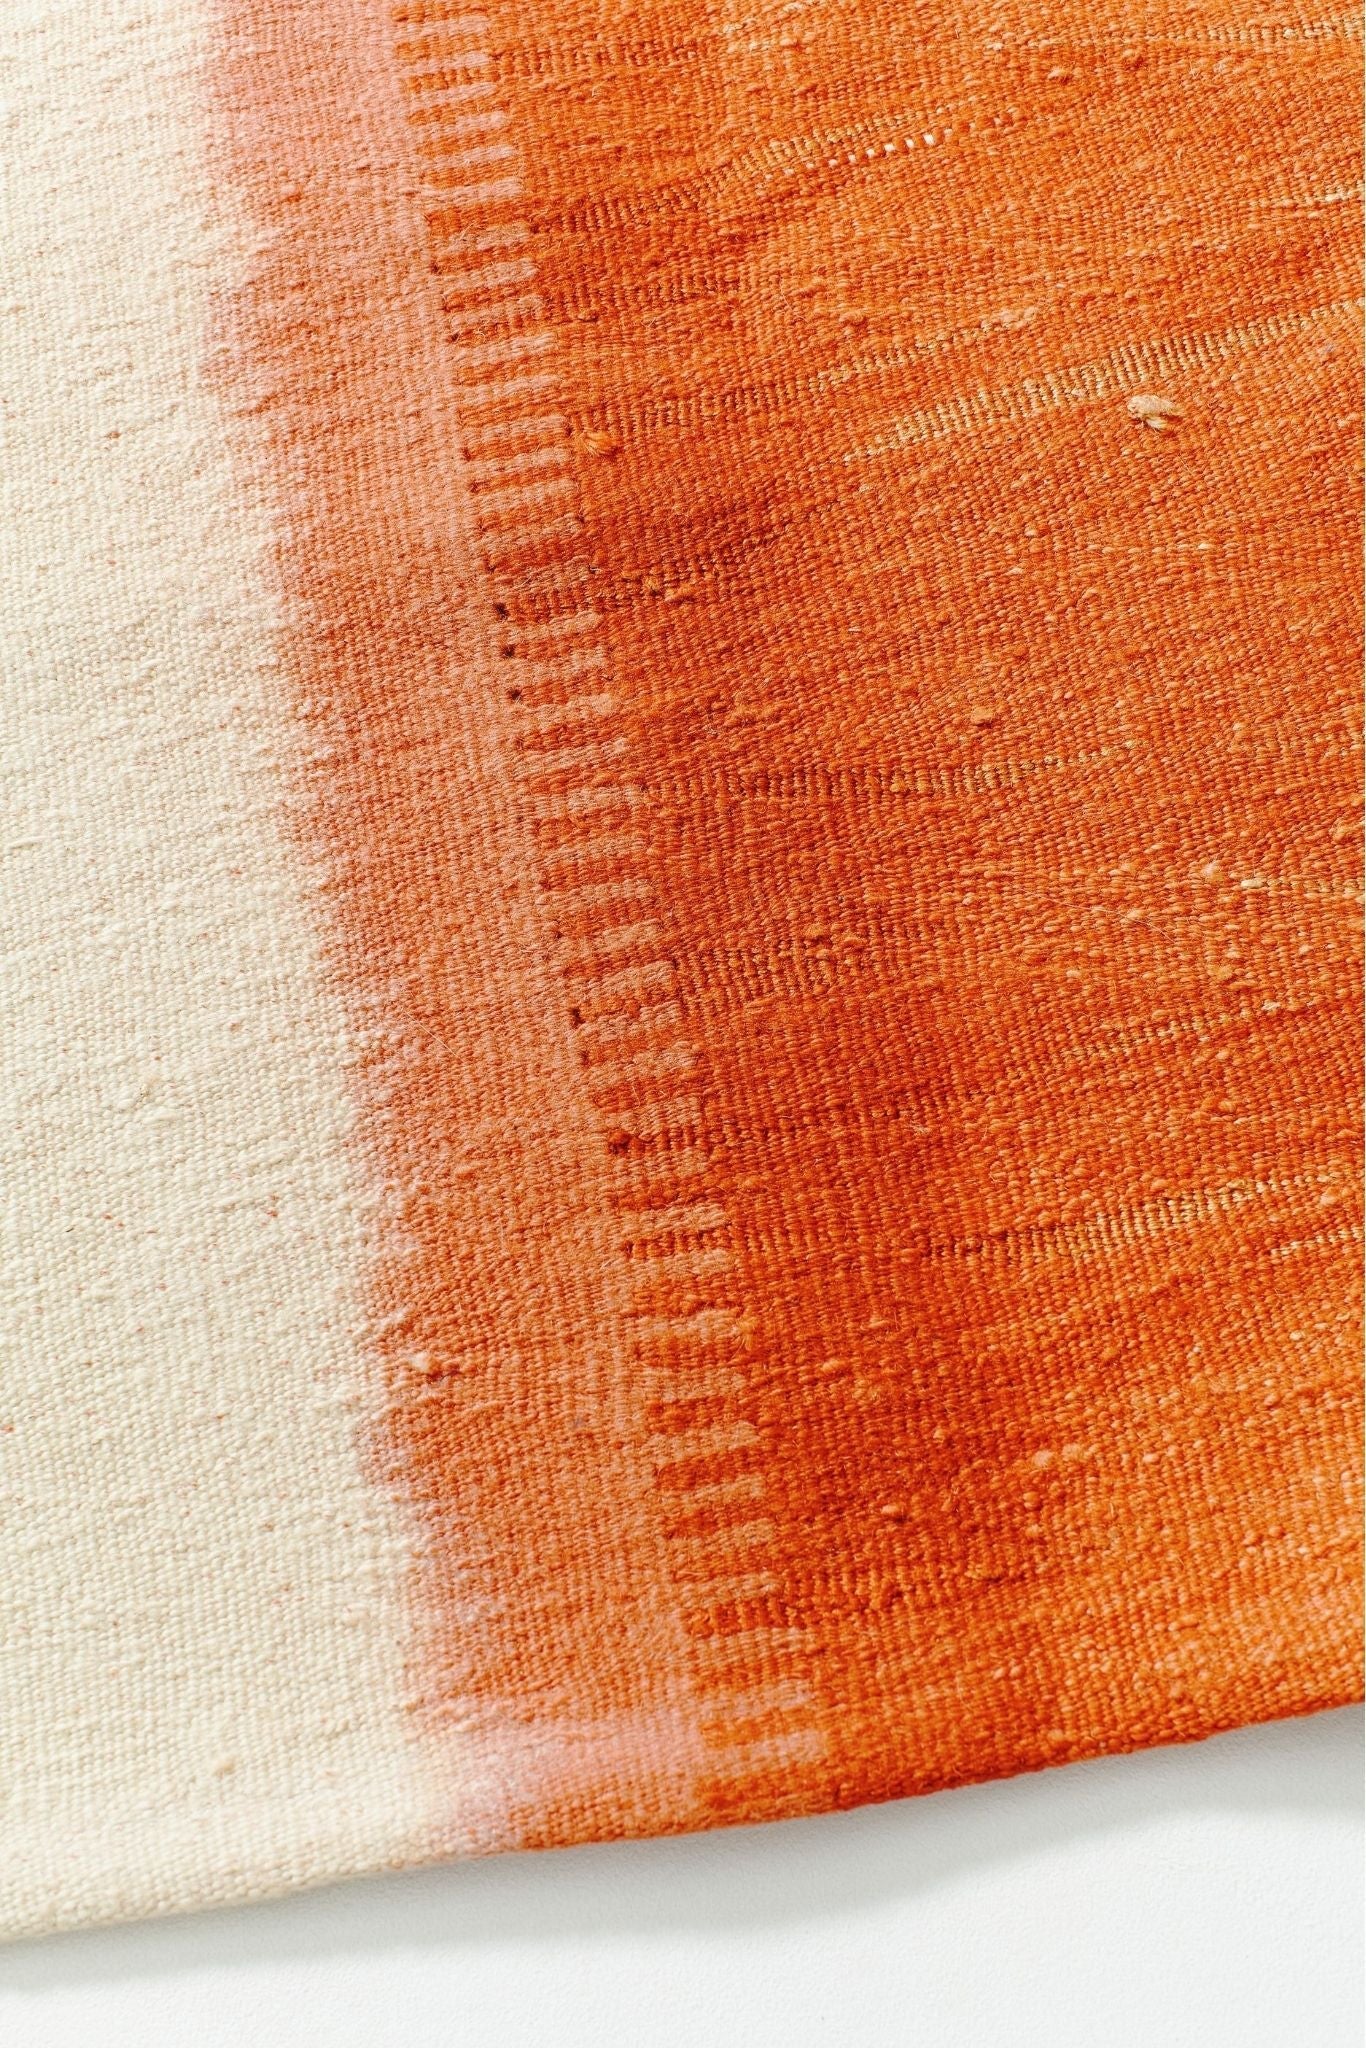 Handwoven rug: "SAFFRON", by Merve Arbedan - Cult Form - TheKeep GlobalHandwoven rug